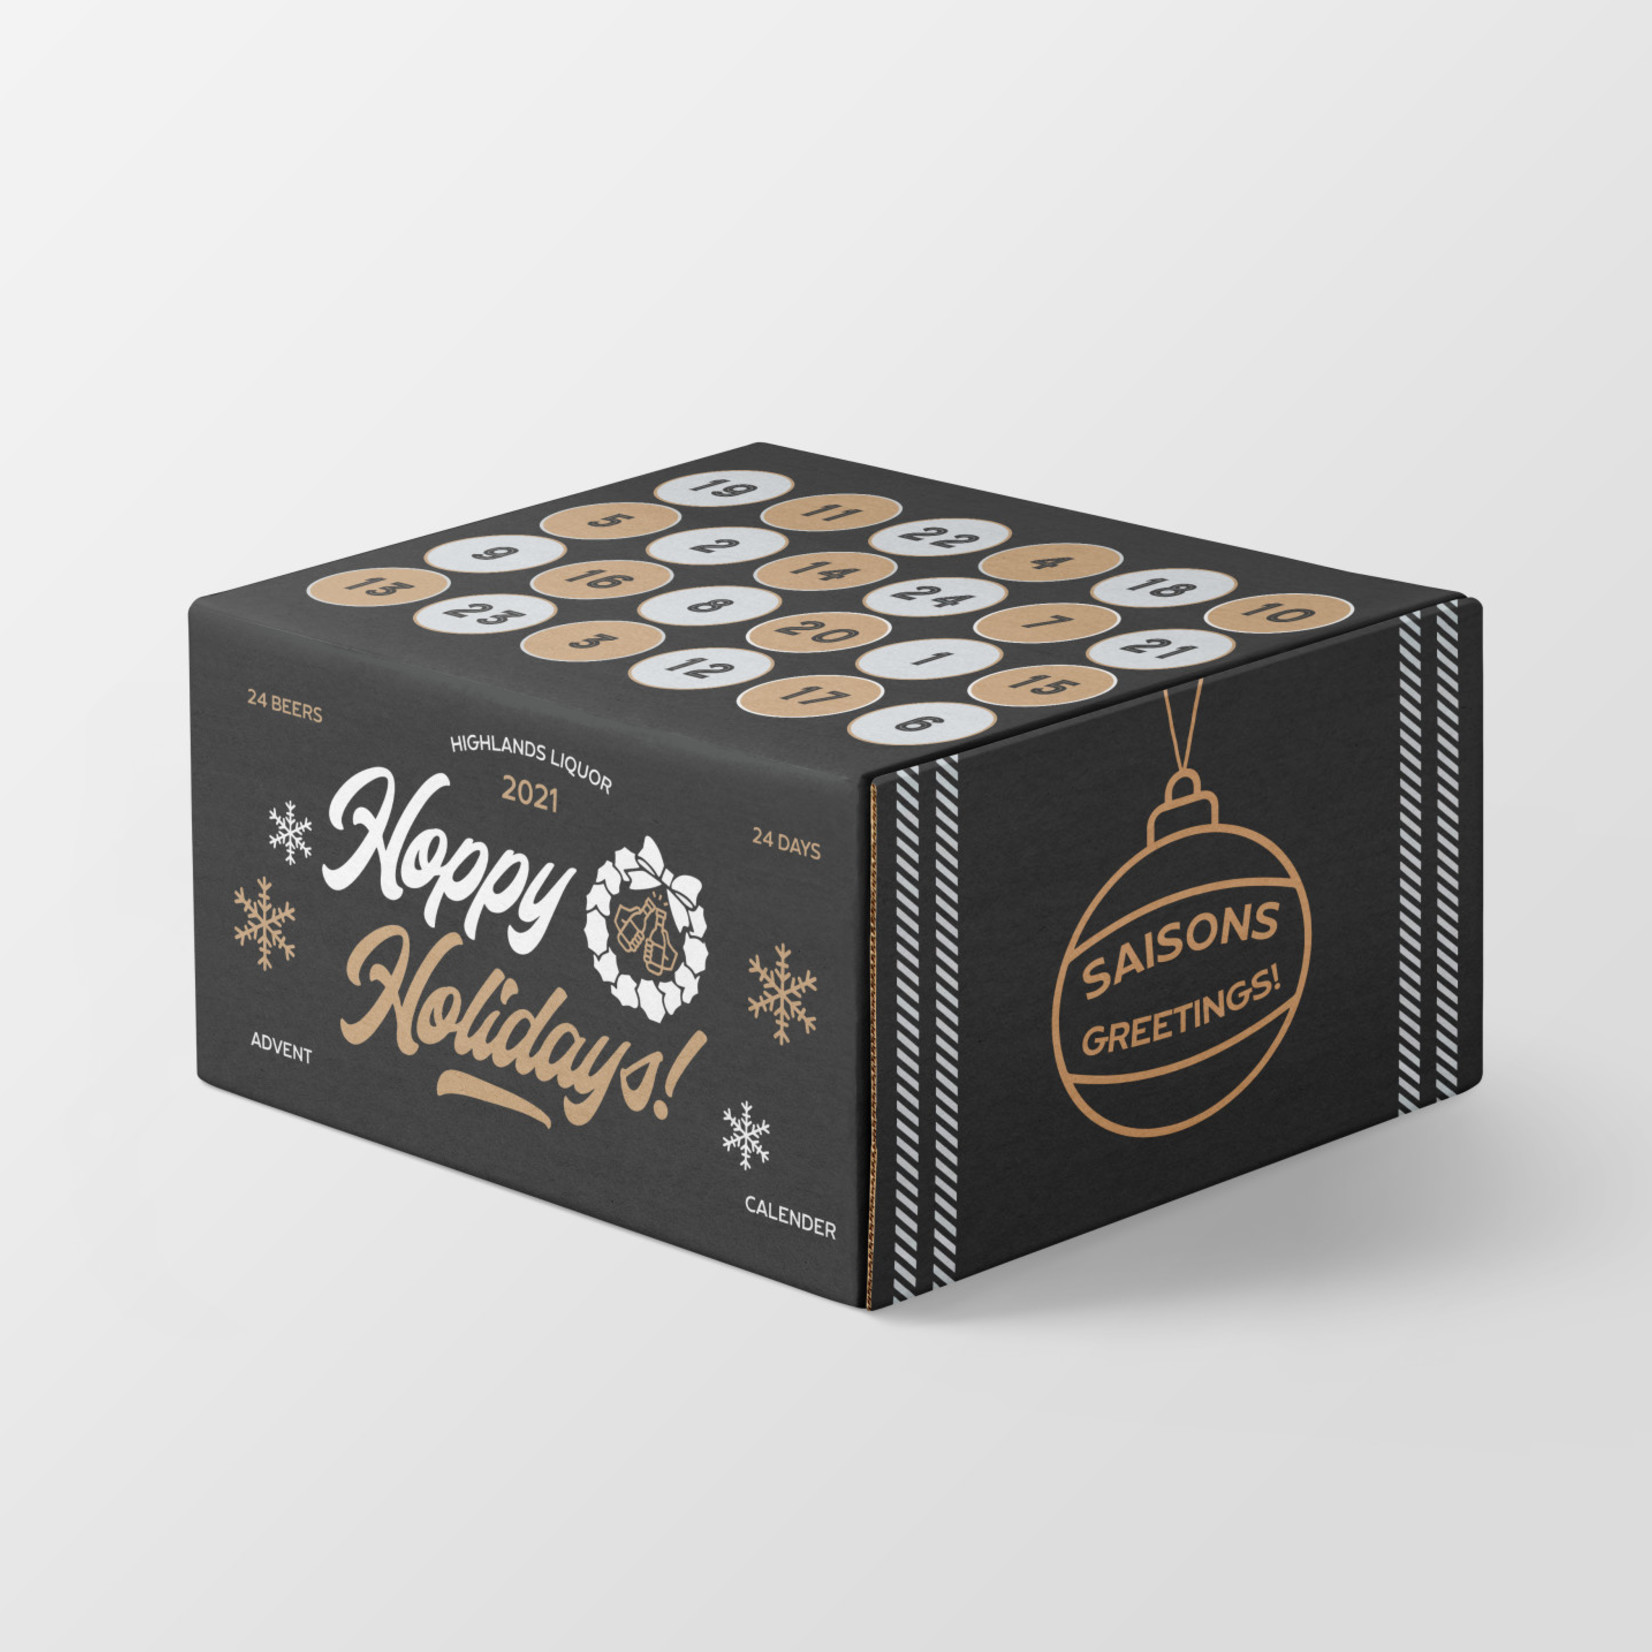 Highlands Liquor 'Hoppy Holidays" MIXED ADVENTURE Craft Beer Advent Calendar, 24x473ml